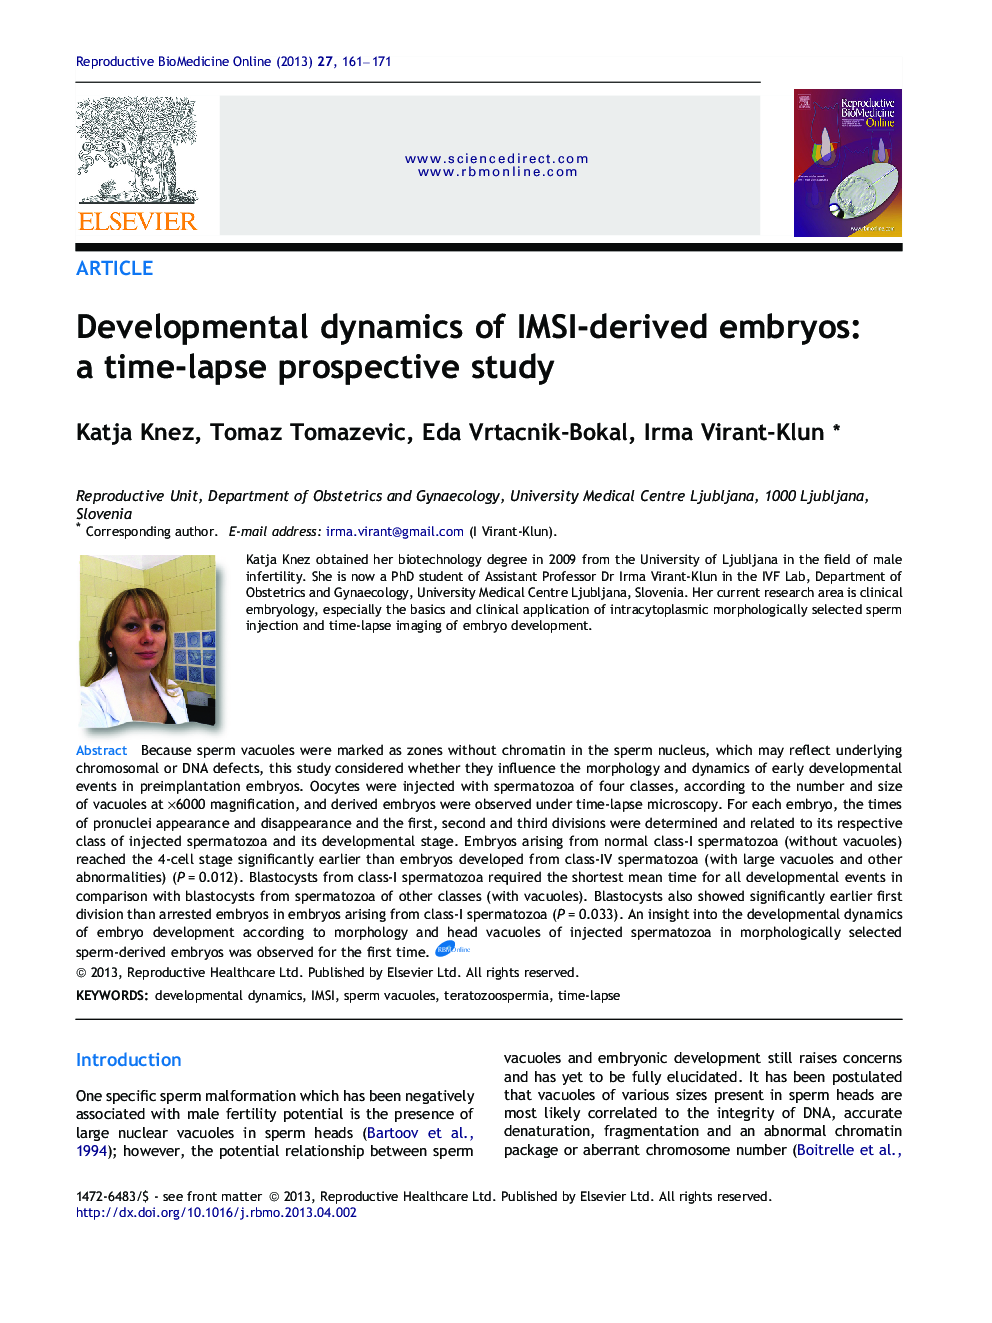 Developmental dynamics of IMSI-derived embryos: a time-lapse prospective study 